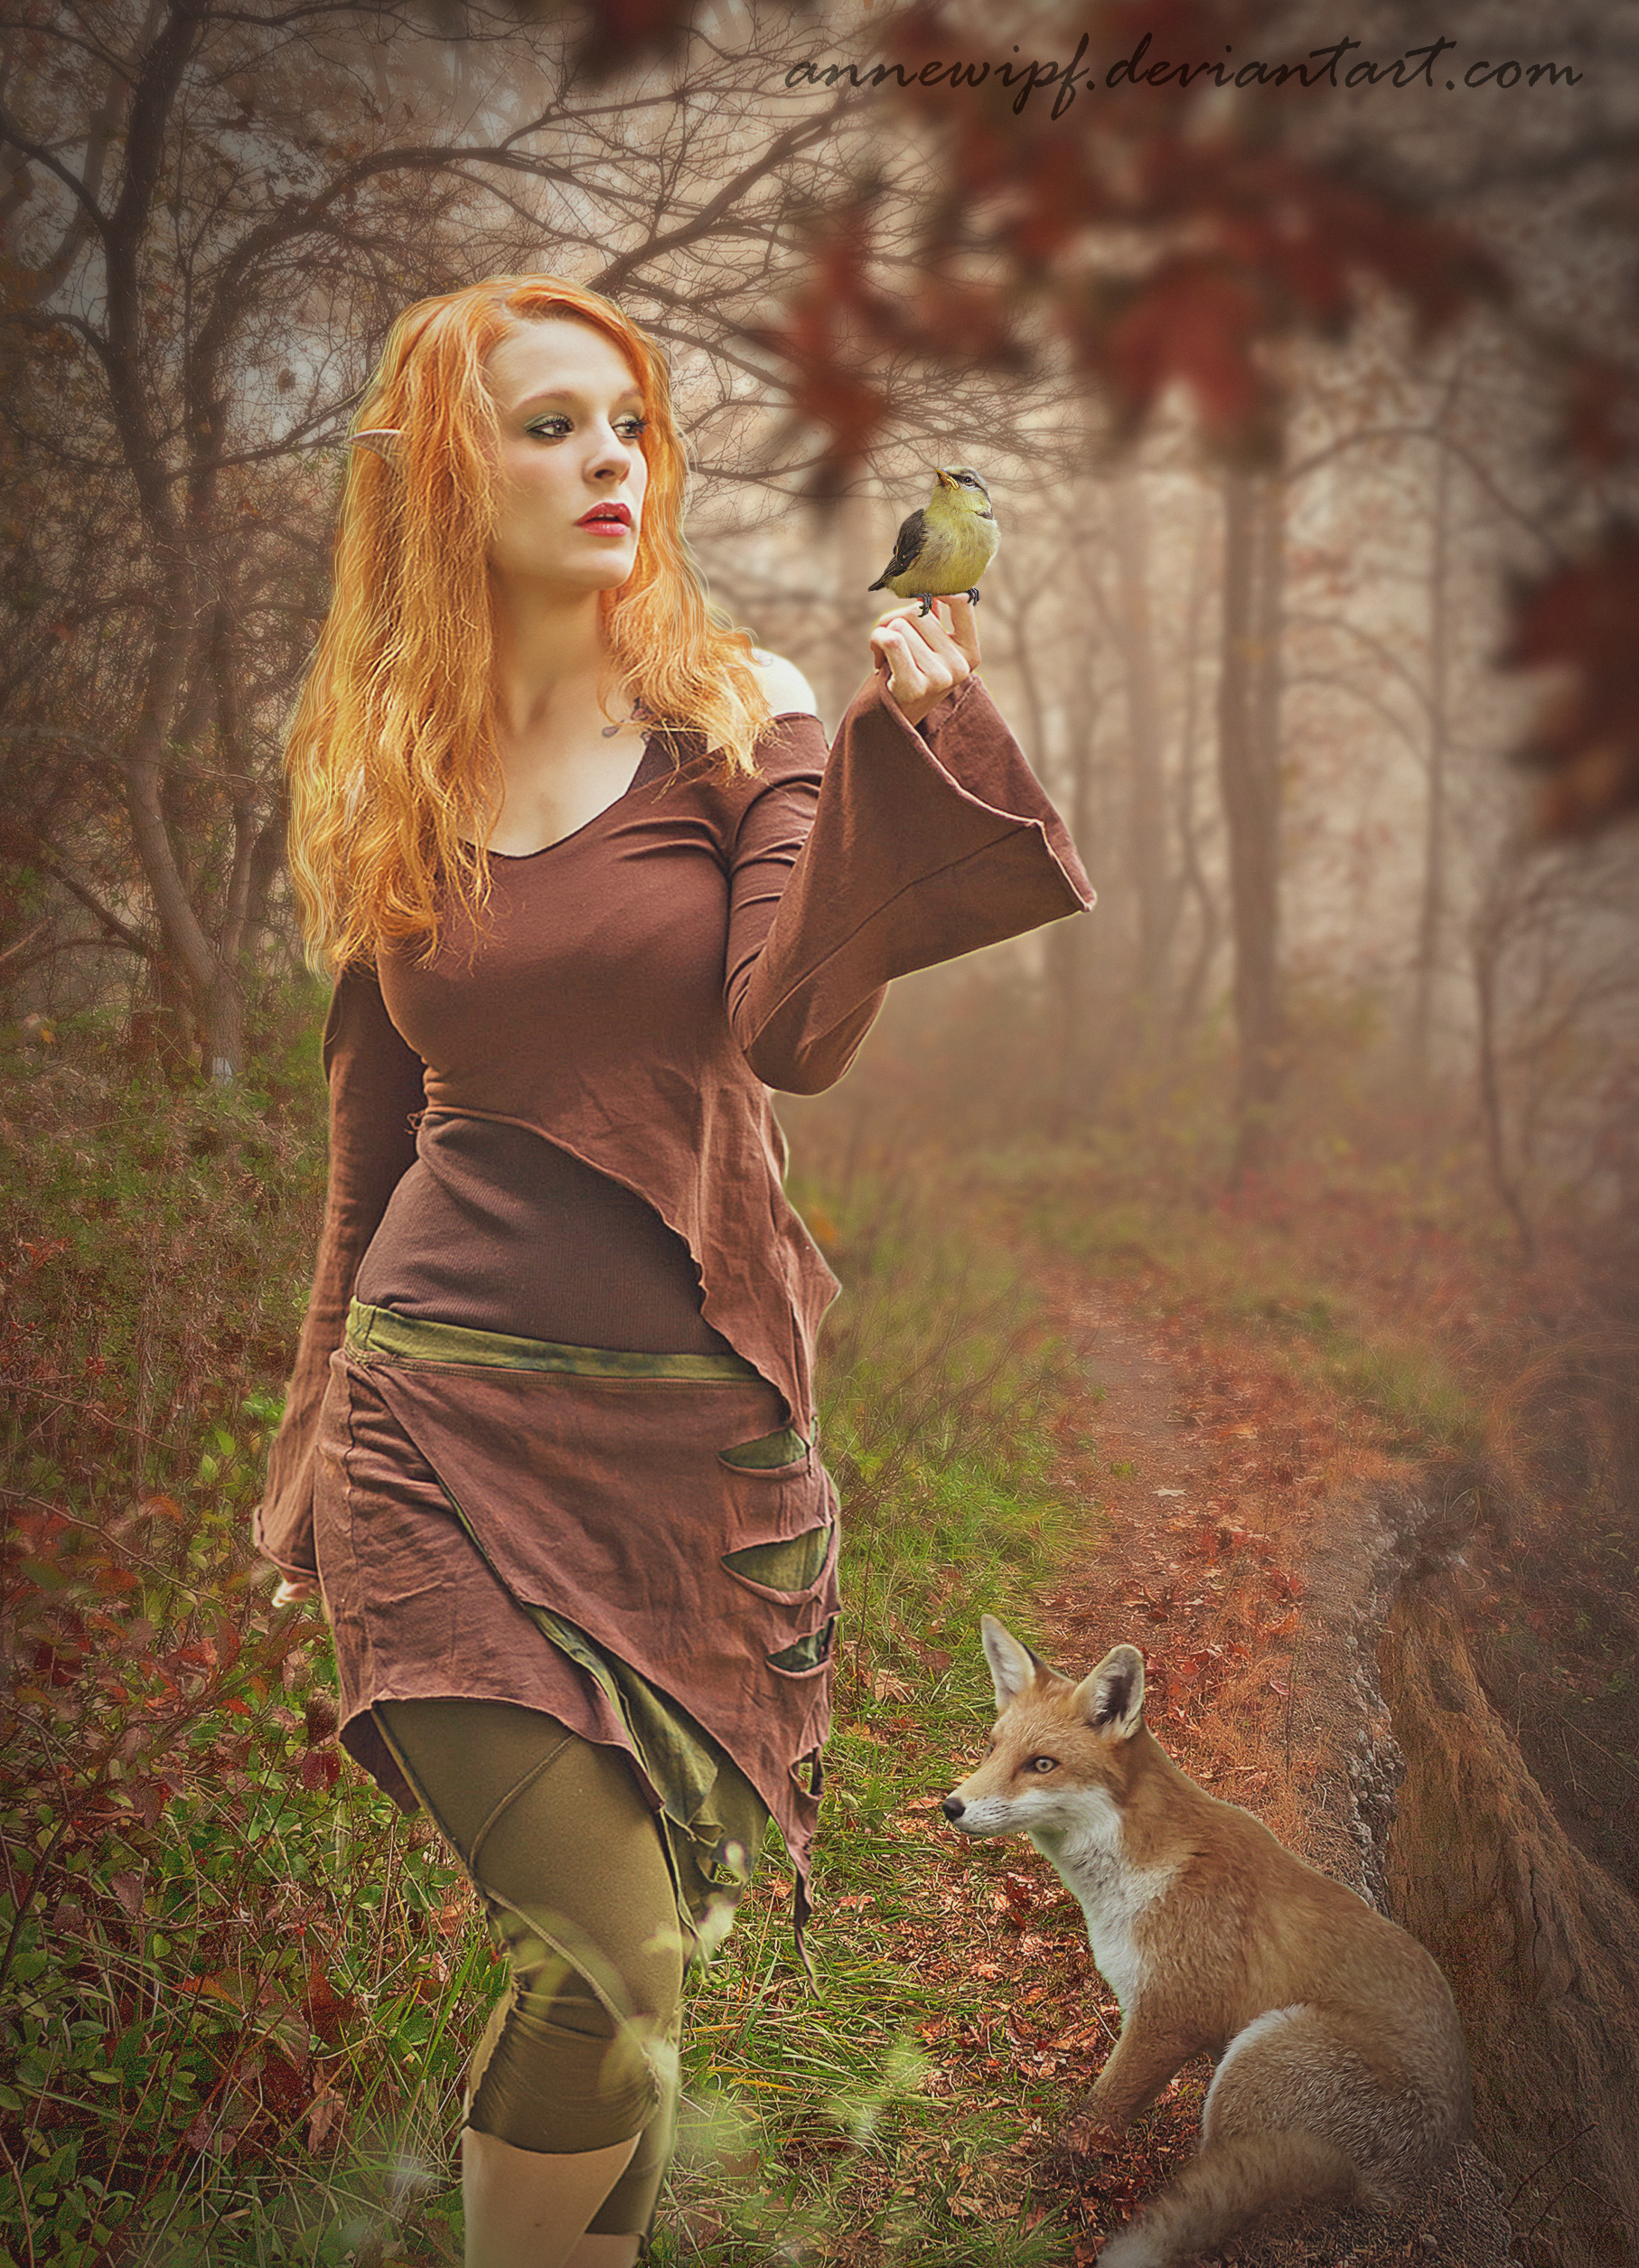 Фото Девушка-эльф, на руке которой сидит птица, и лиса в осеннем лесу, работа annewipf